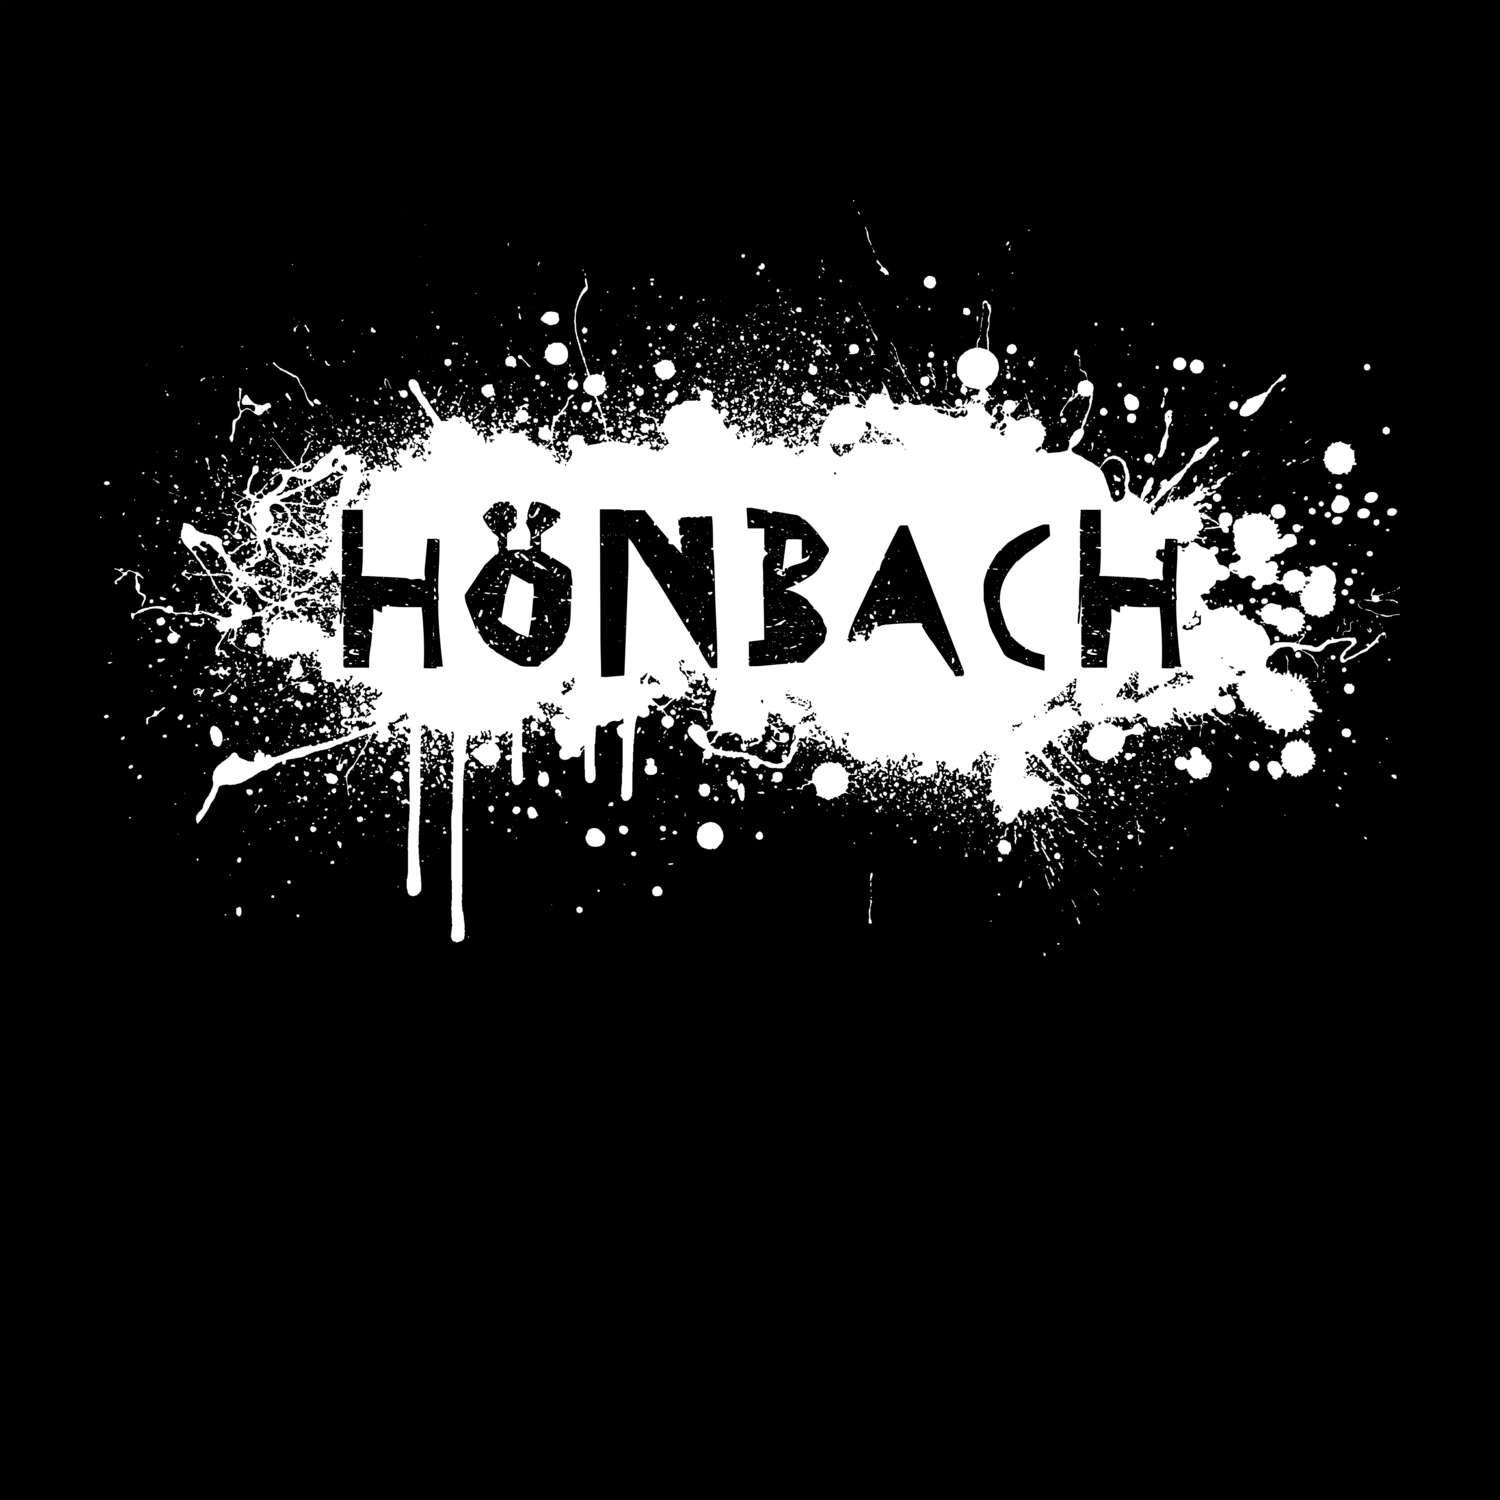 Hönbach T-Shirt »Paint Splash Punk«